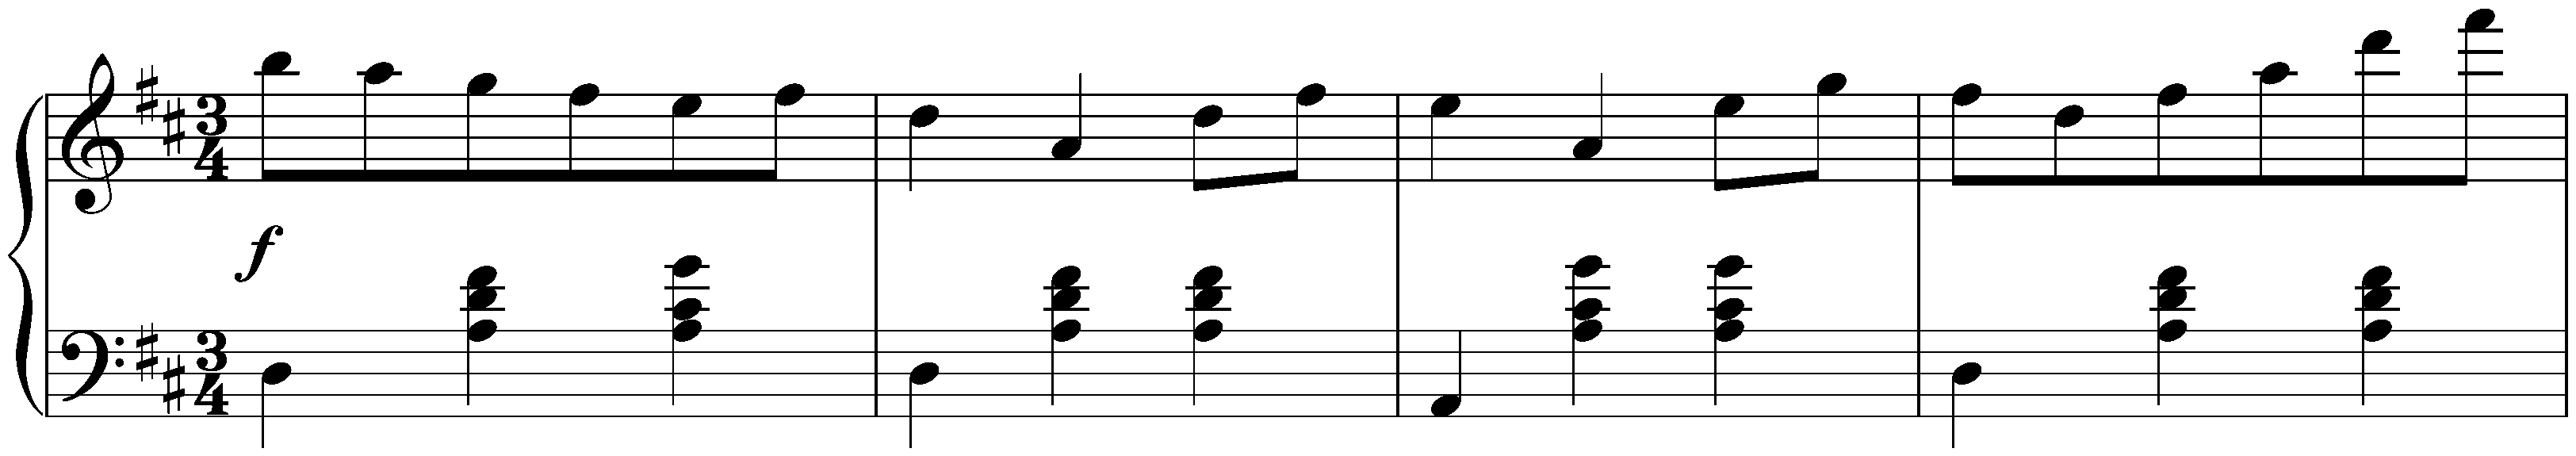 Twelve Waltzes, seventeen Ländler and nine Ecossaises, D 145; 29. Seventeen Ländler, no. 17 in D major